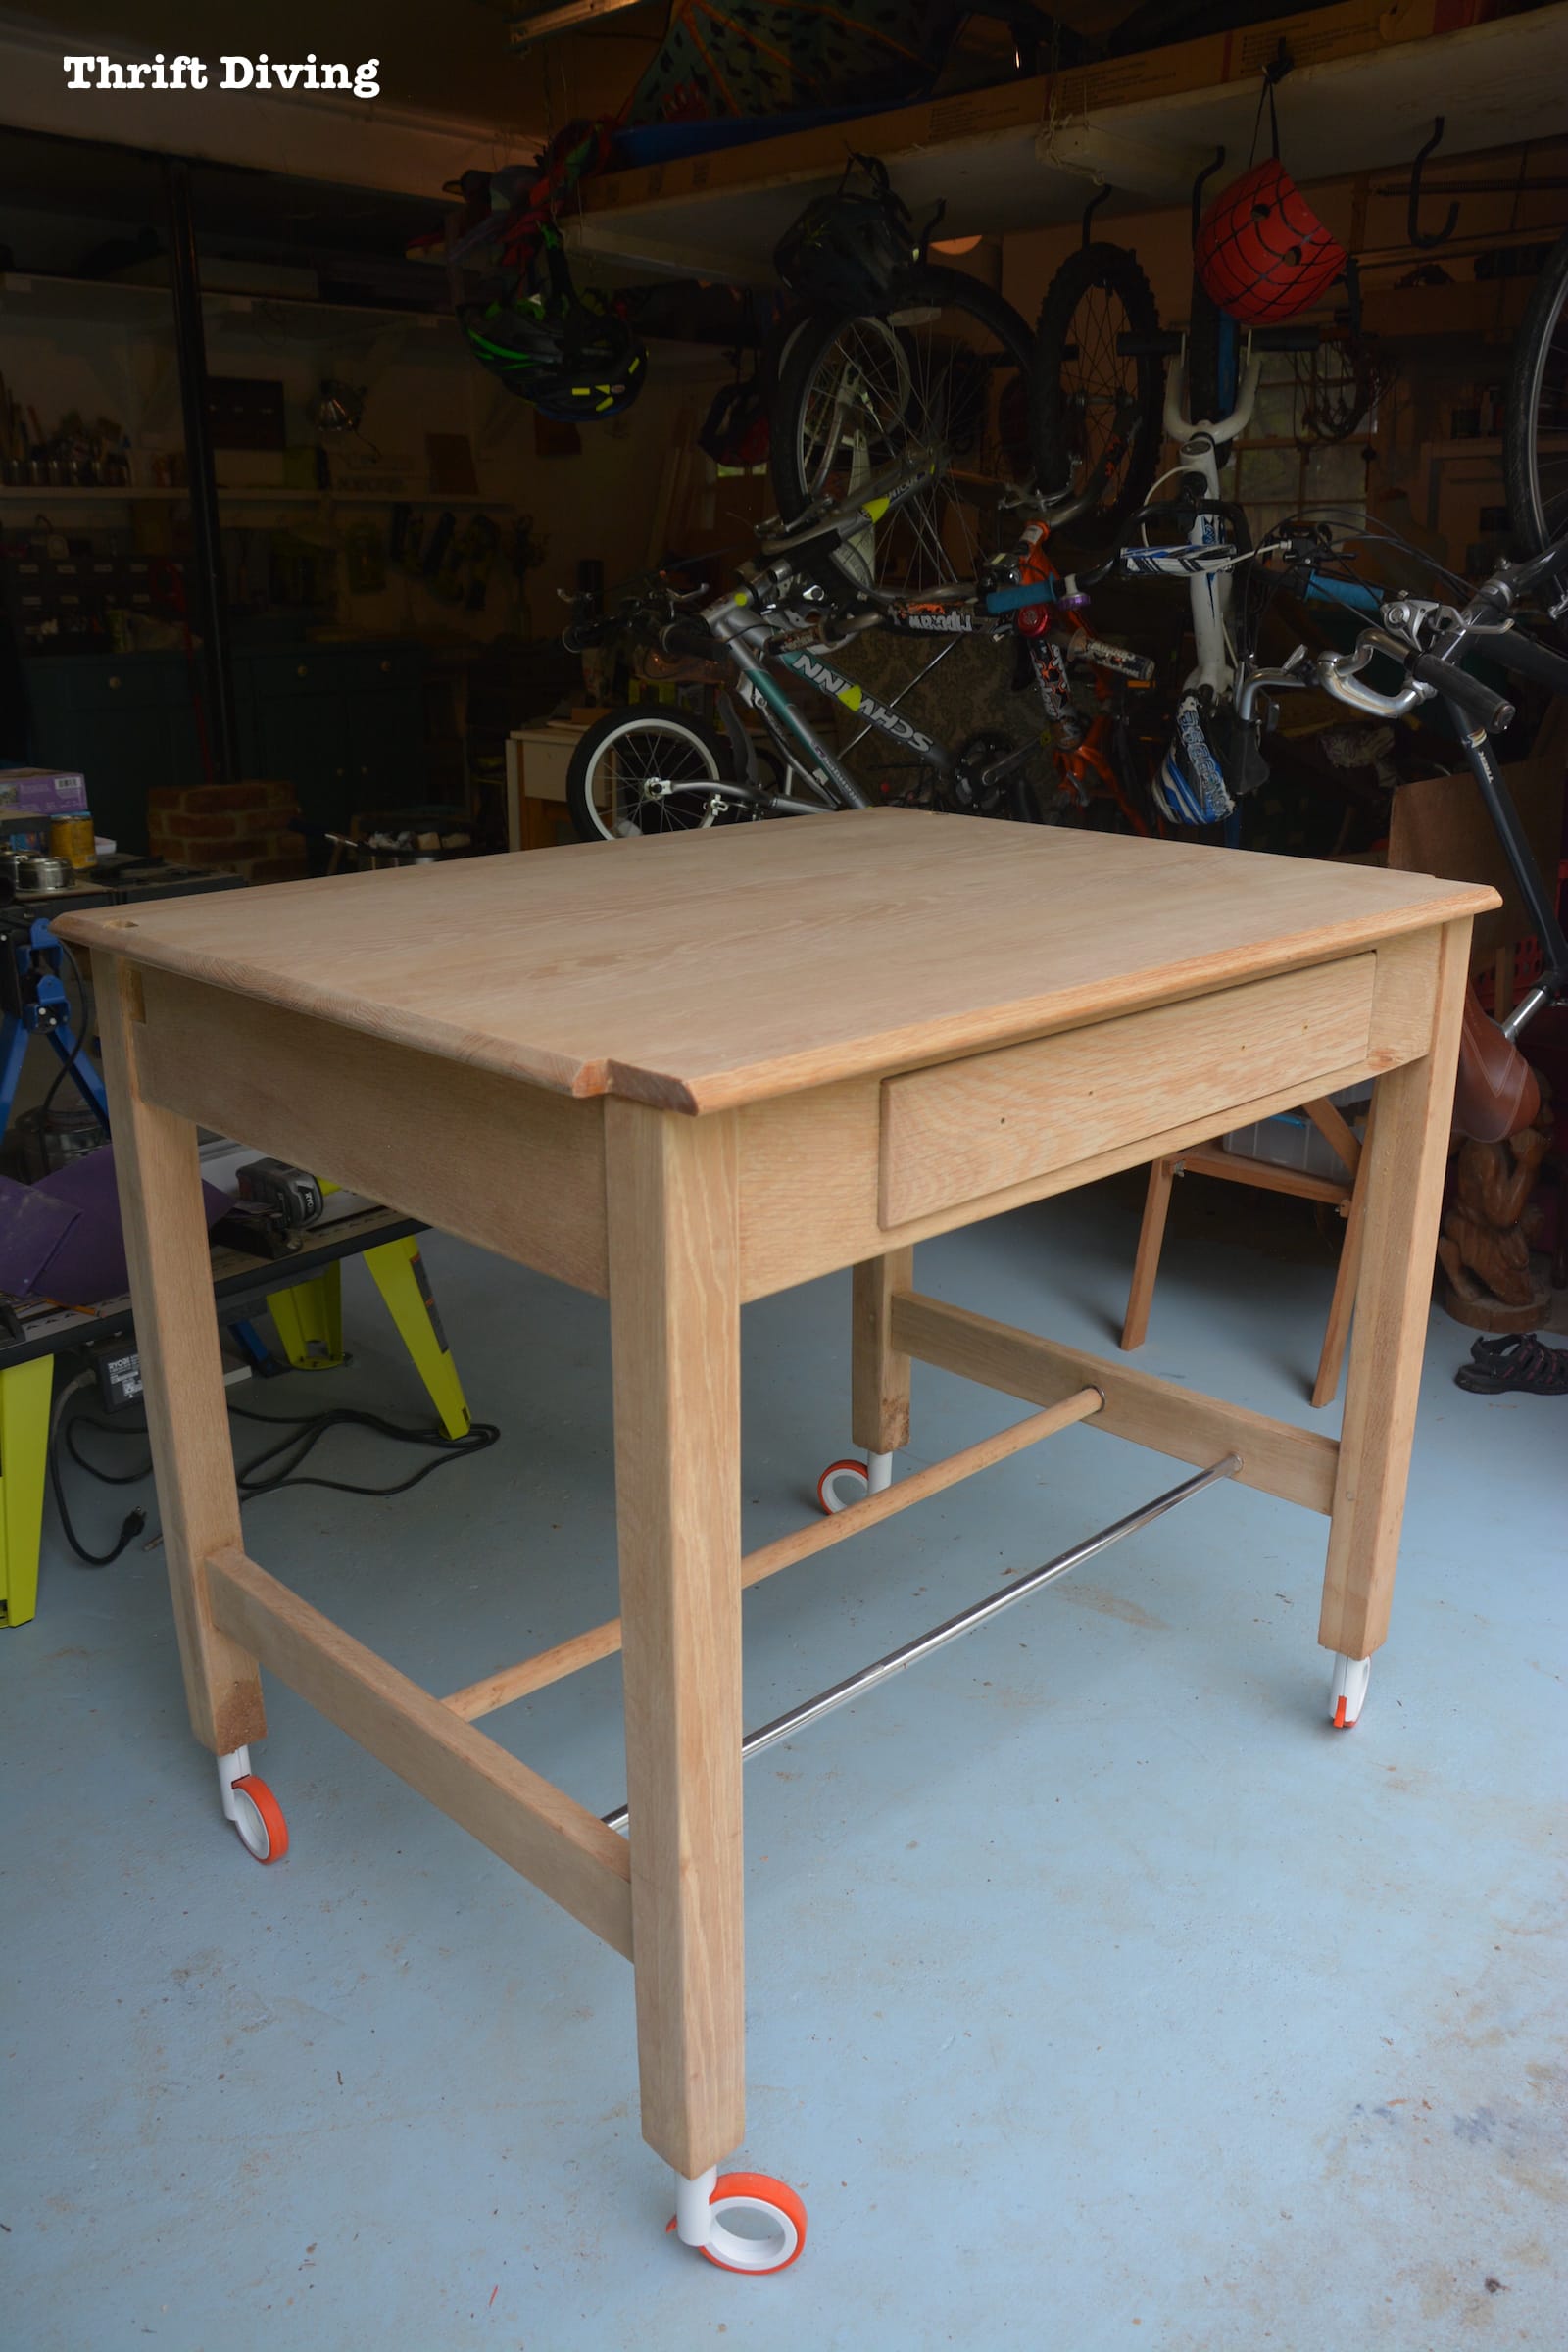 Strip furniture: Turn an old drafting table into natural wood furniture - DIY garage workstation | Thrift Diving